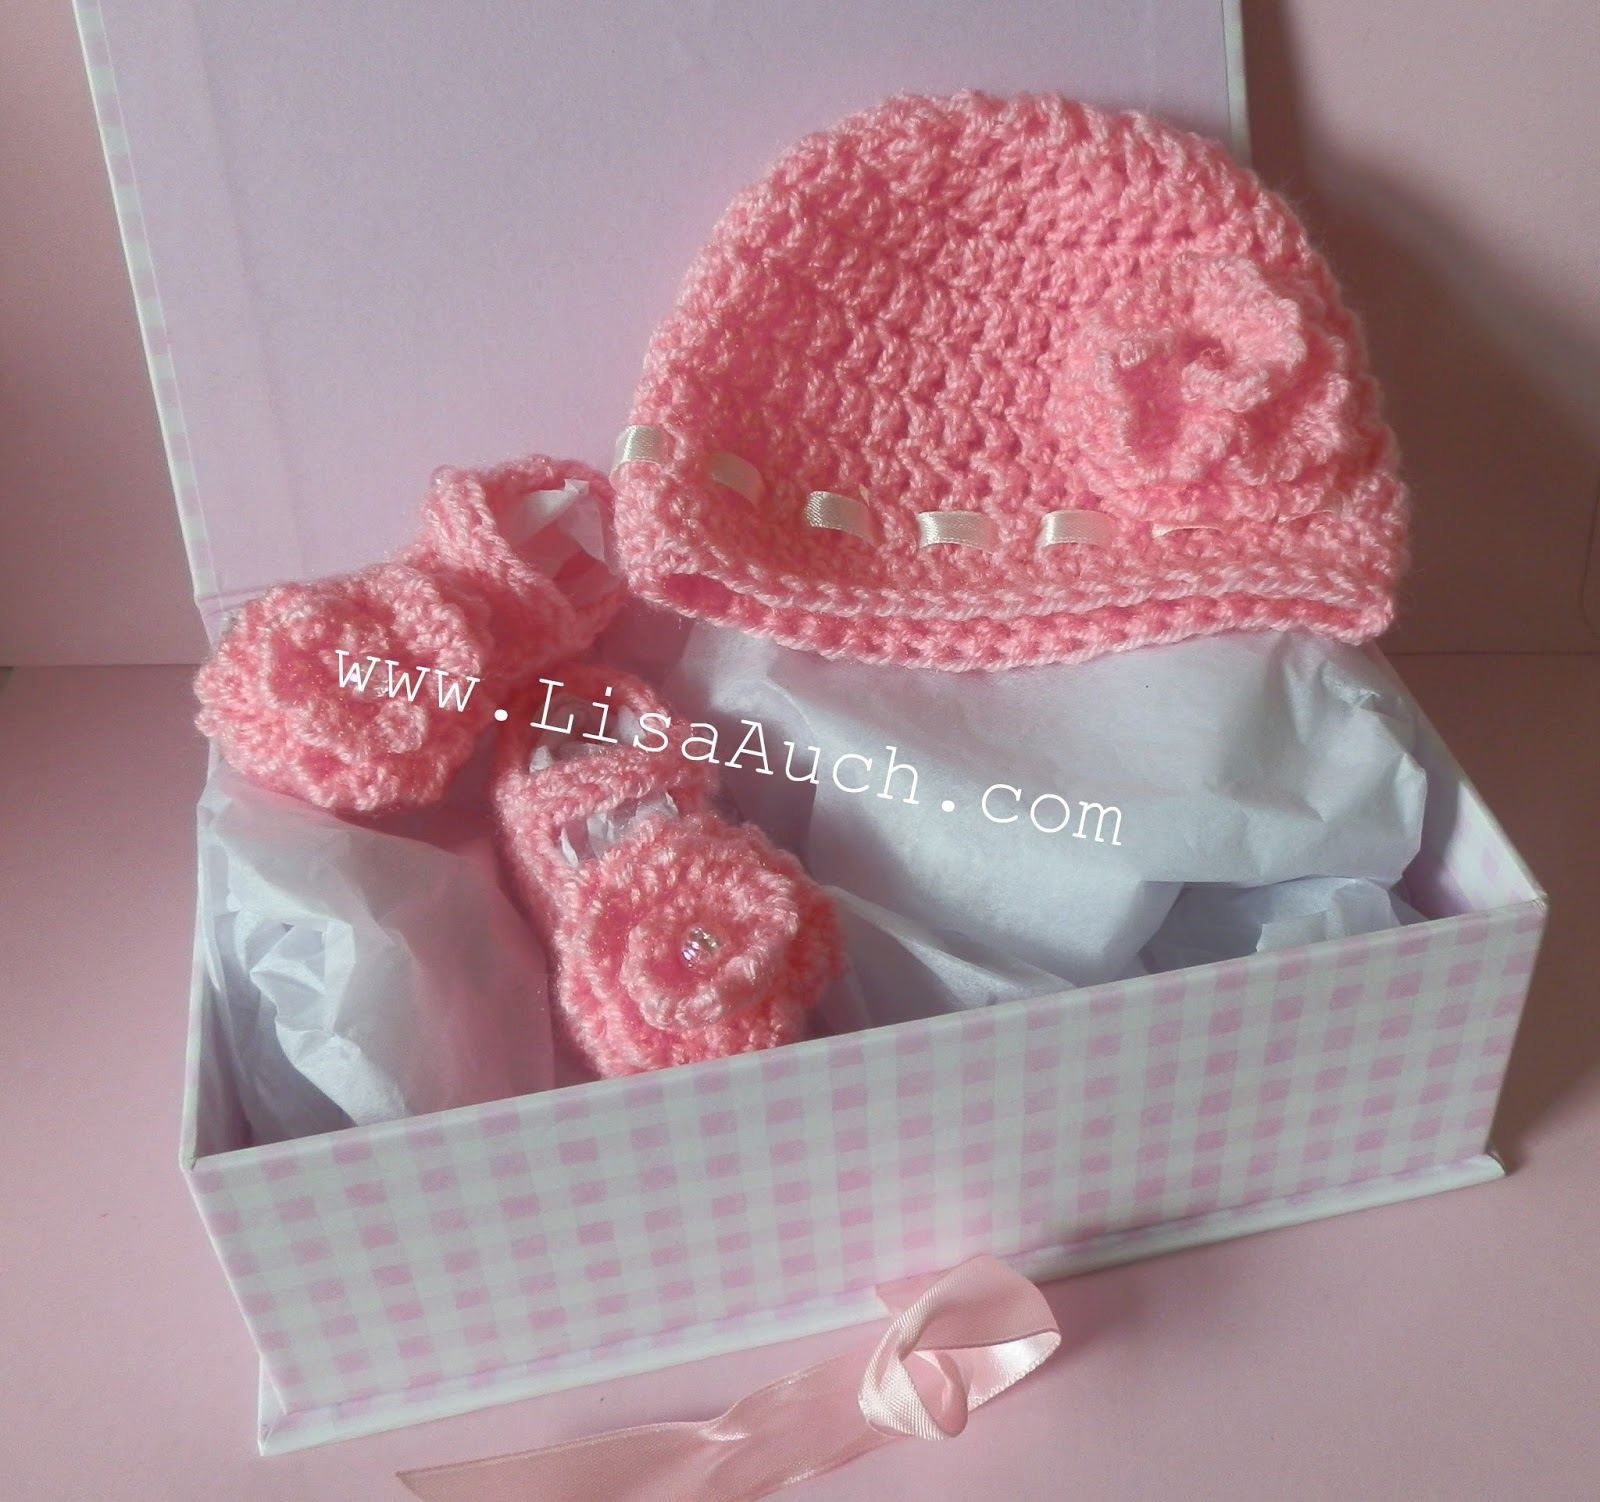 Free Crochet Baby Hats Patterns Easy Free Crochet Patterns And Designs Lisaauch Free Crochet Patterns